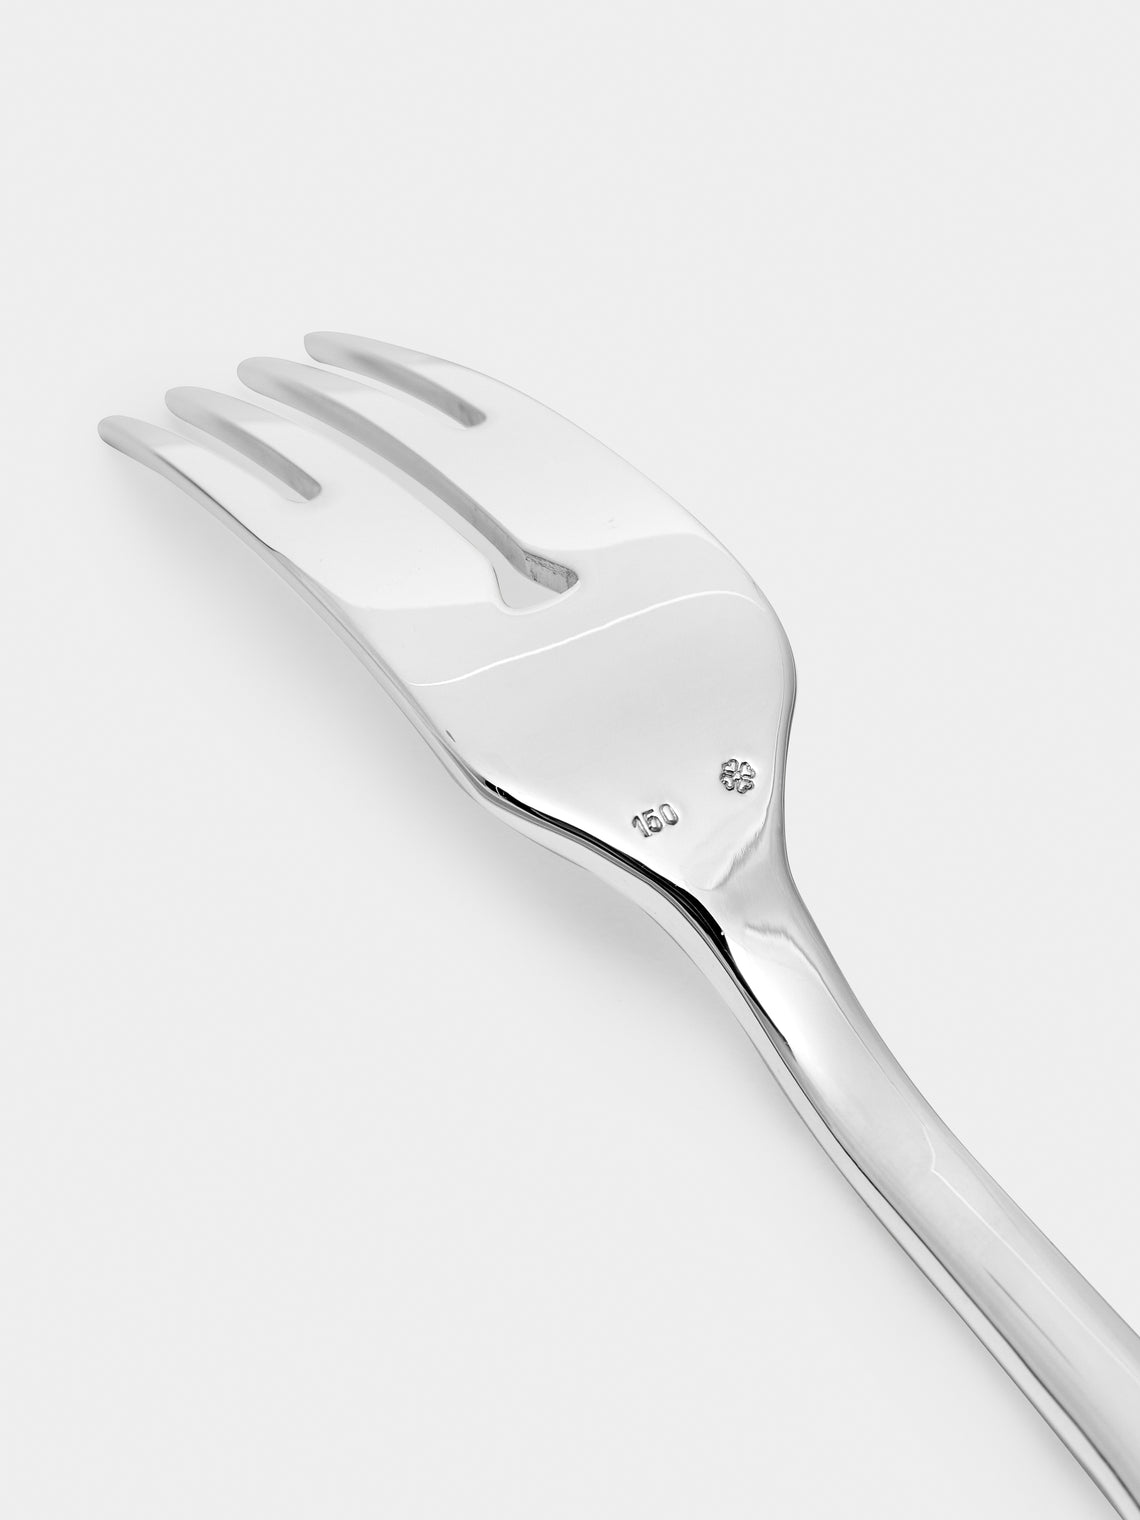 Wiener Silber Manufactur - Josef Hoffmann 135 Silver-Plated Fish Fork - Silver - ABASK